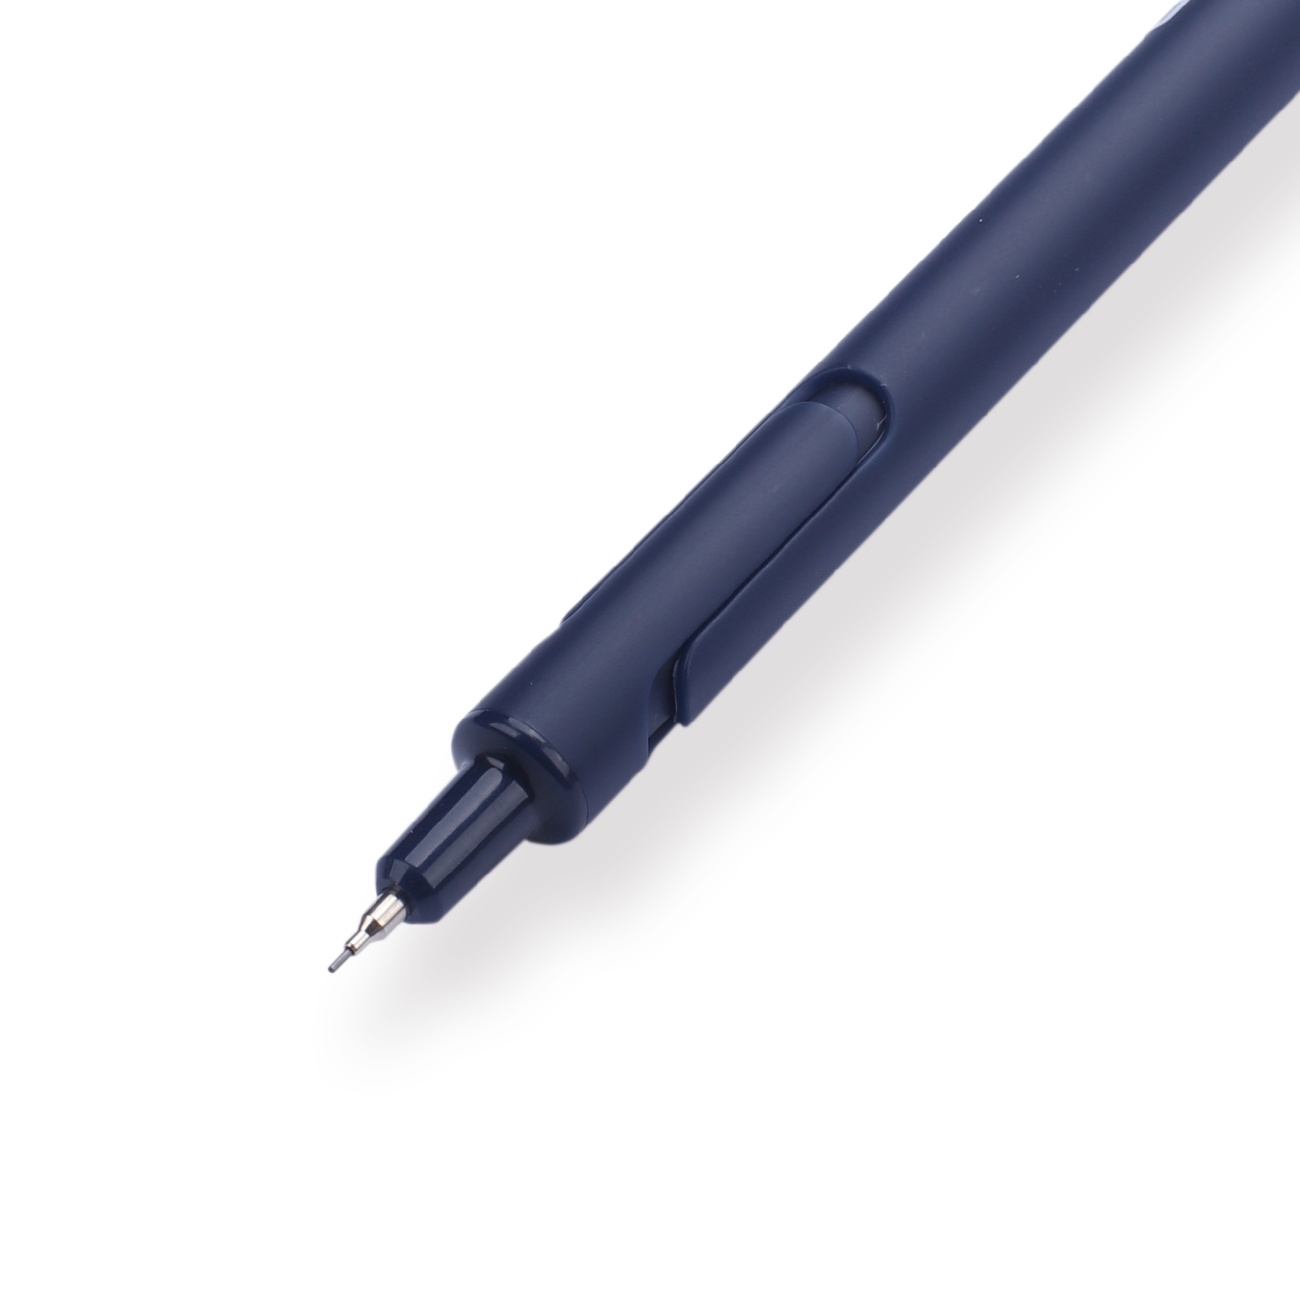 Sun-Star Topull S Mechanical Pencil - 0.5 mm - Navy